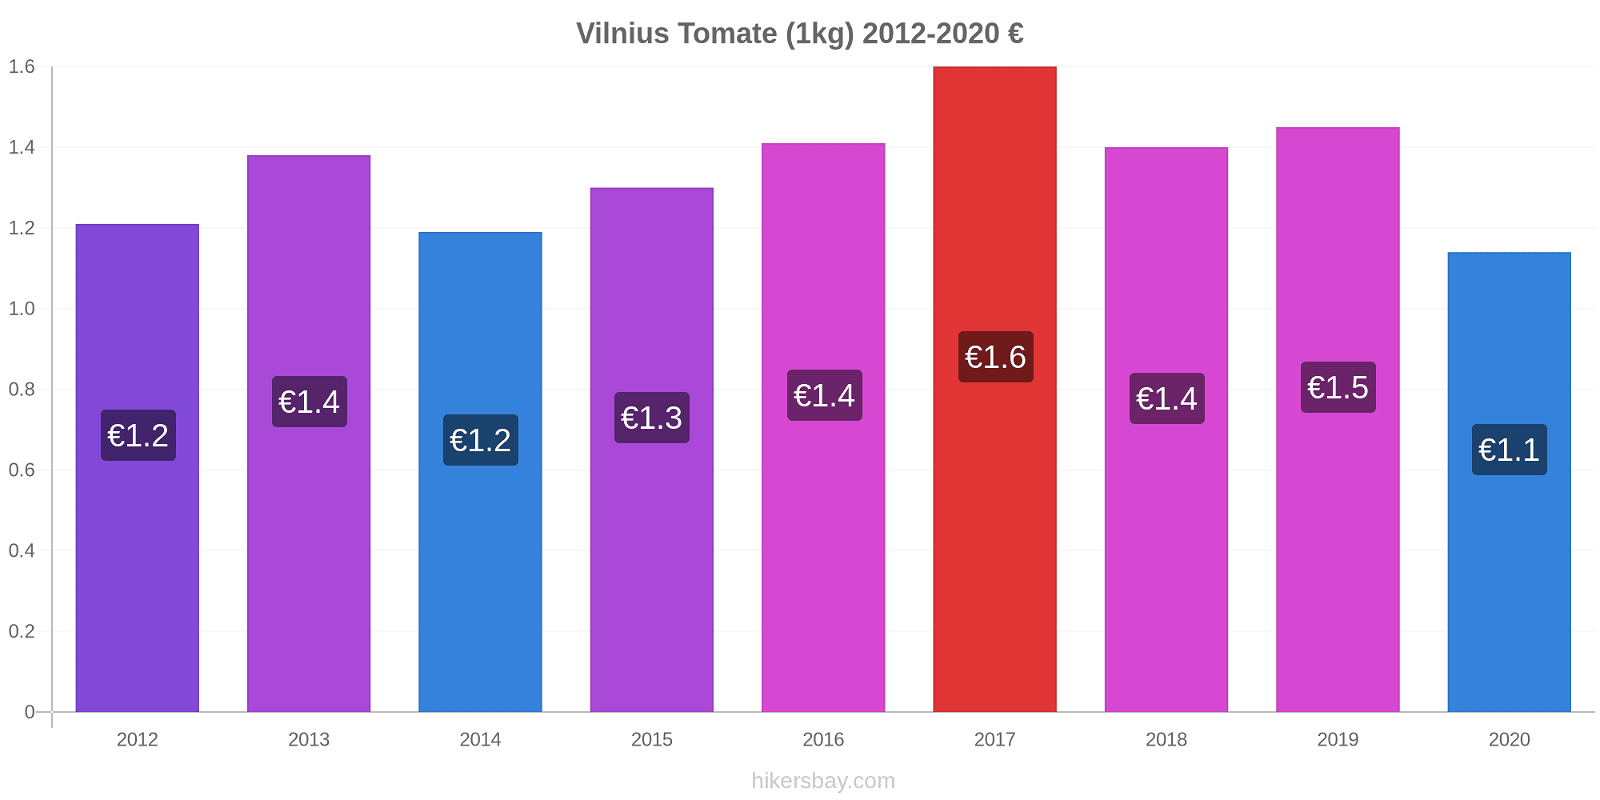 Vilnius modificări de preț Tomate (1kg) hikersbay.com